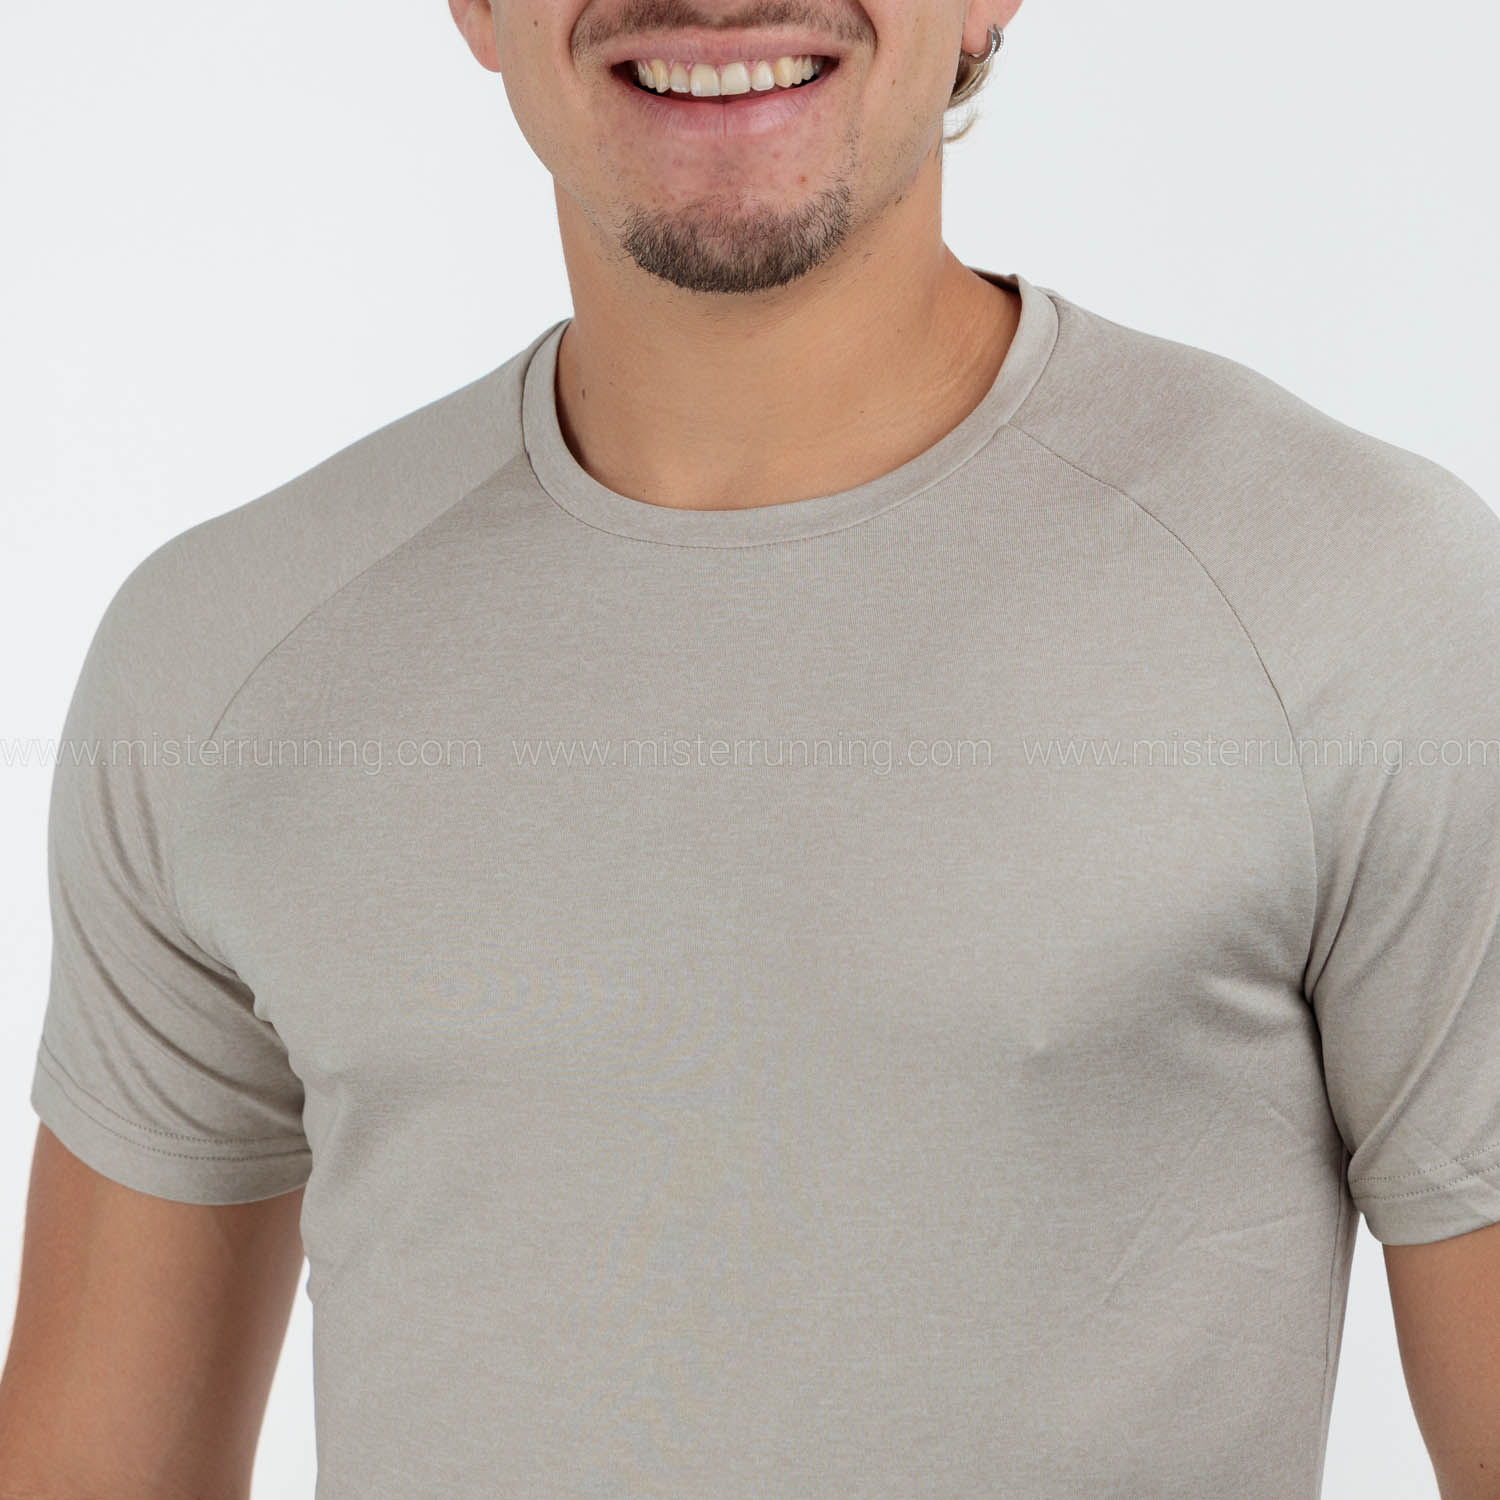 Odlo Active 365 Camiseta - Silver Cloud Melange